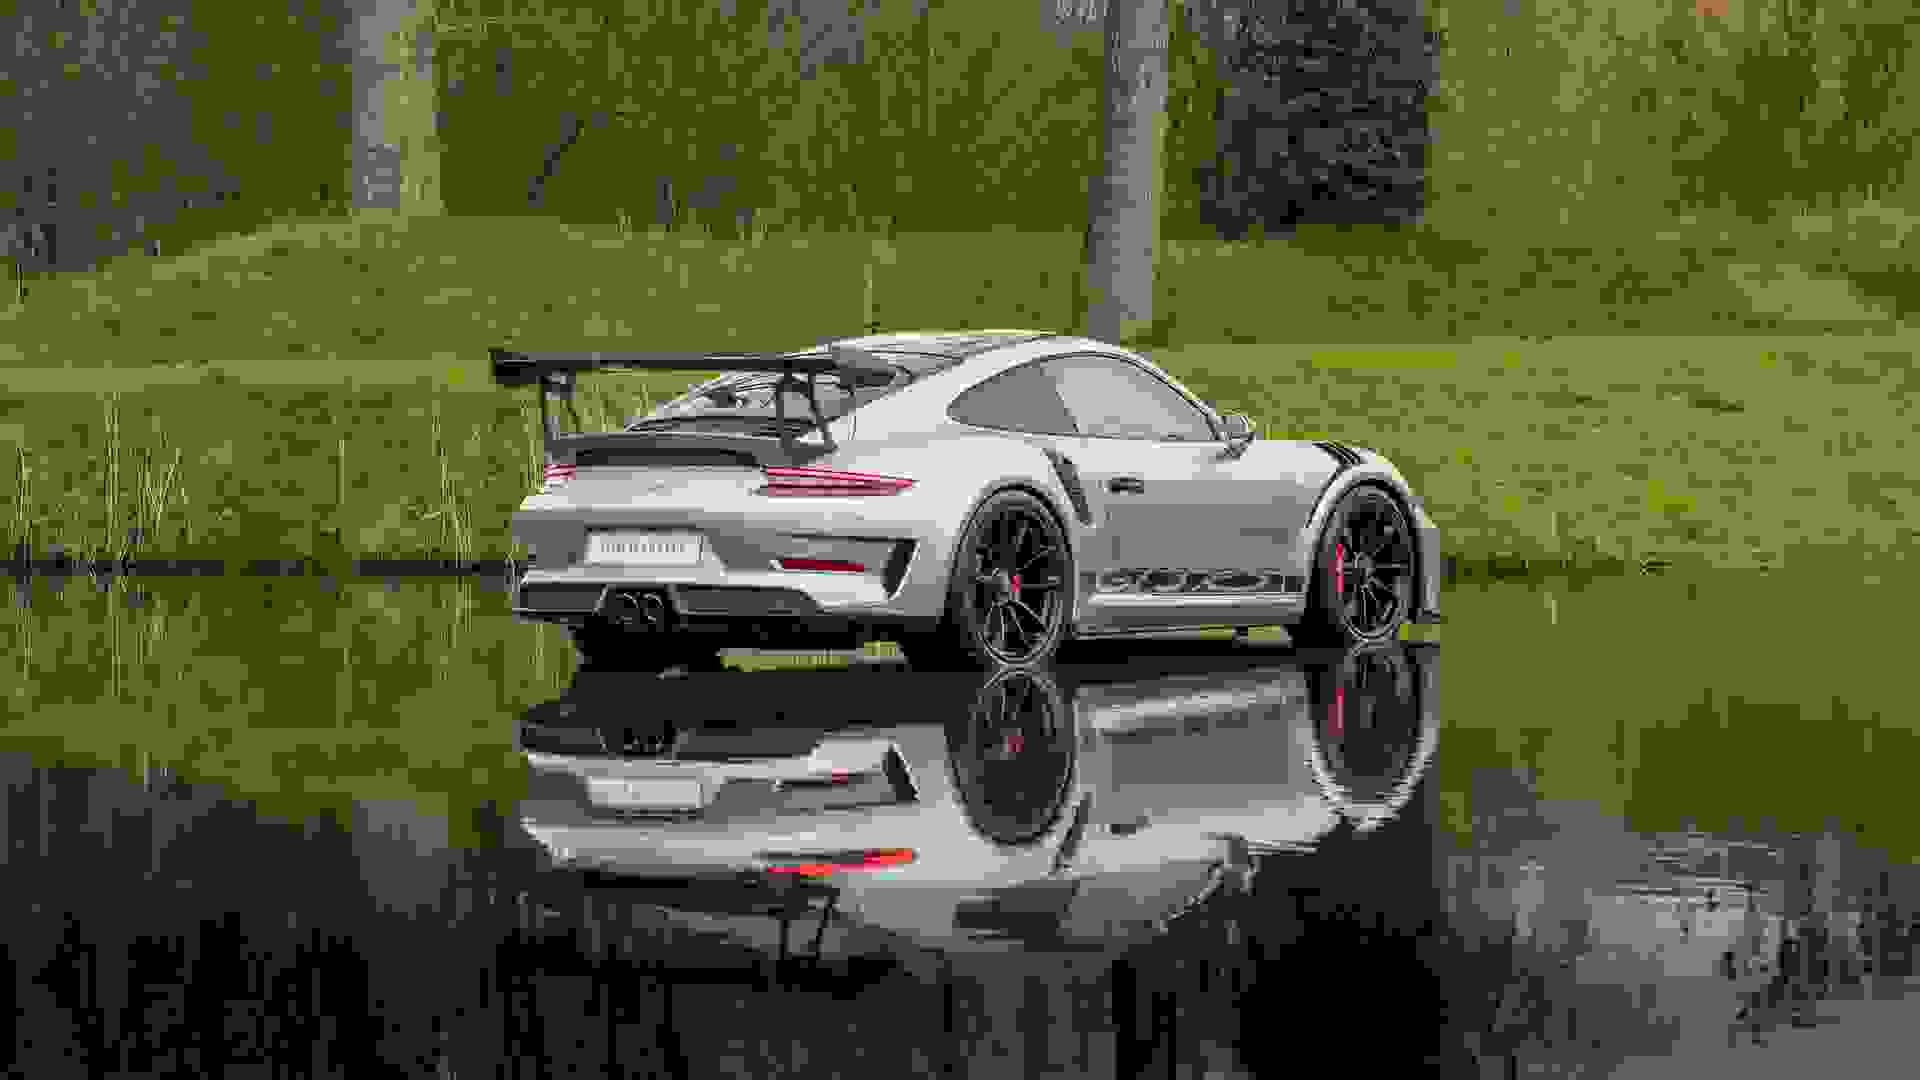 Porsche 911 Photo 0df6ba71-f622-4212-9196-9be194440303.jpg